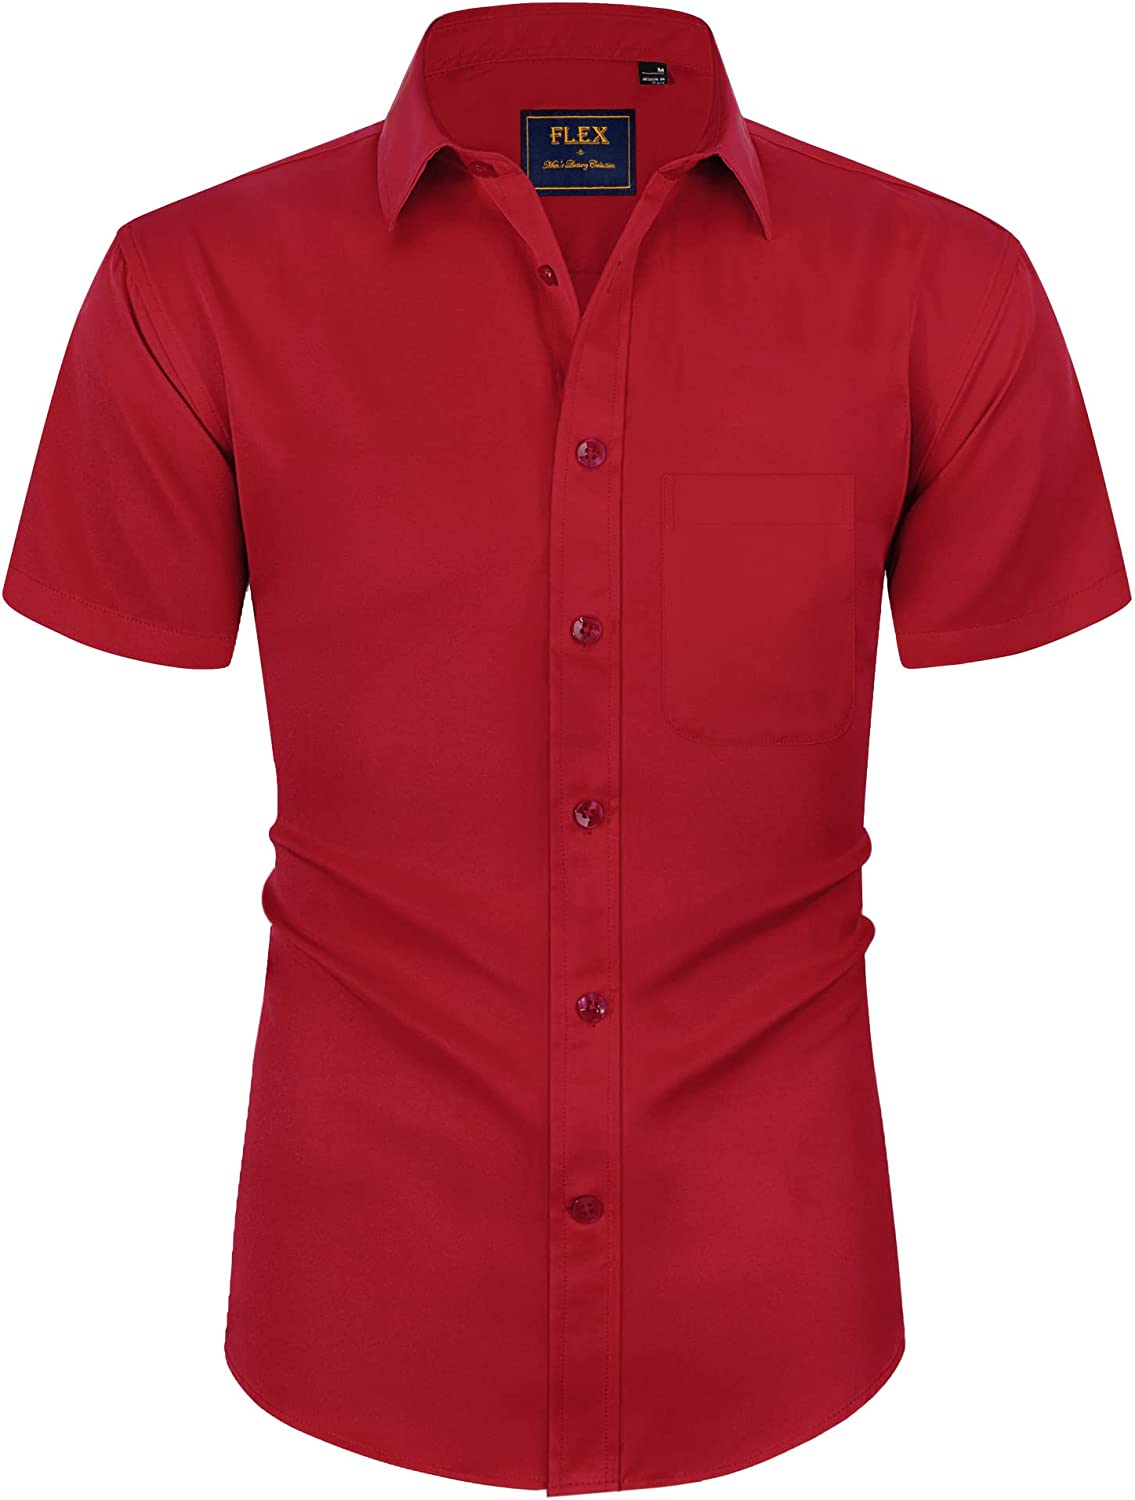 Alimens & Gentle Mens Short Sleeve Dress Shirts Wrinkle Free Solid